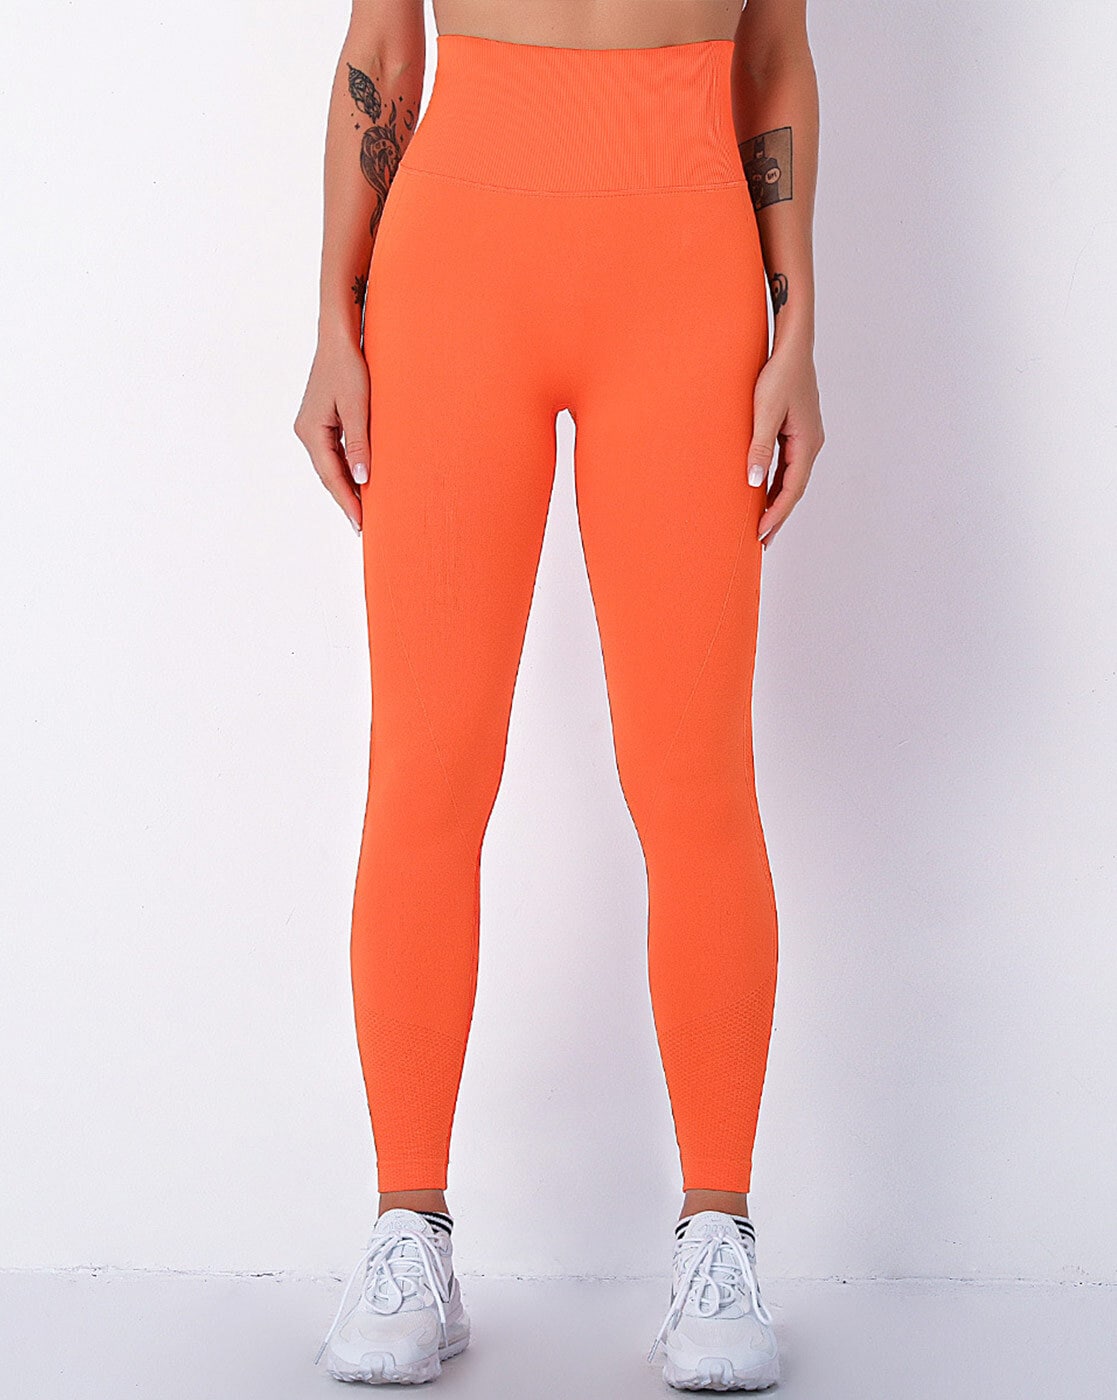 Buy Orange Leggings for Women by Belonge Online